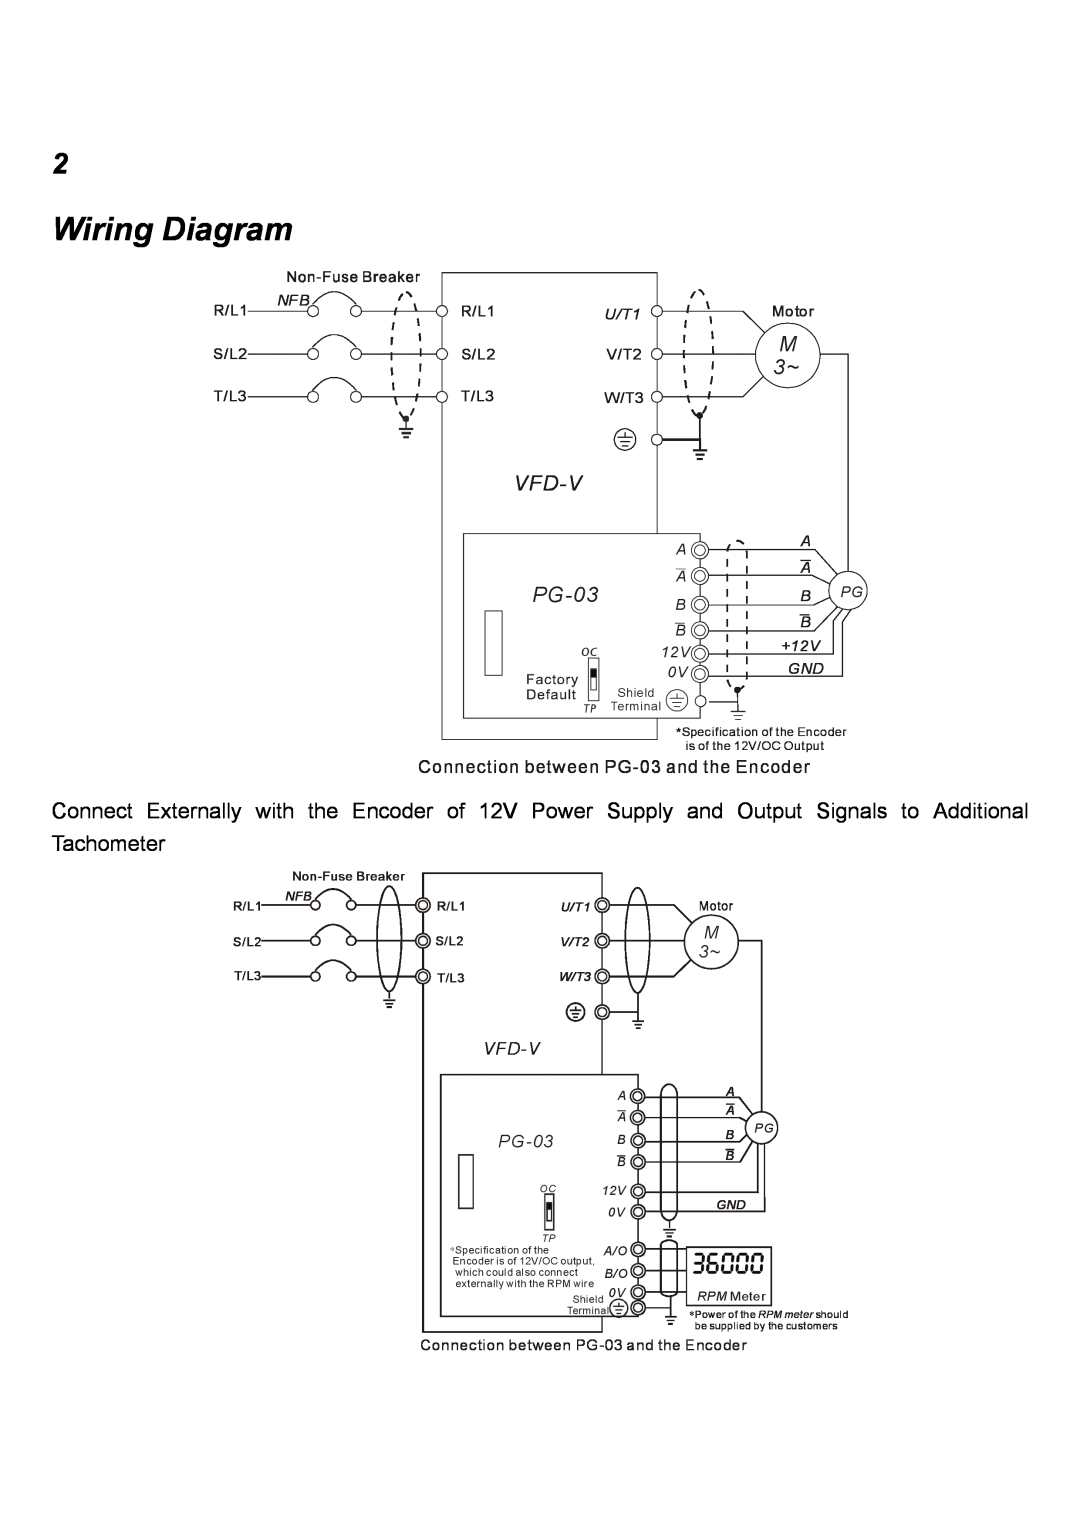 Delta Electronics Wiring Diagram, Vfd-V, Connection between PG-03 and the Encoder, R/L1 NFB S/L2 T/L3, U/T1, Motor 